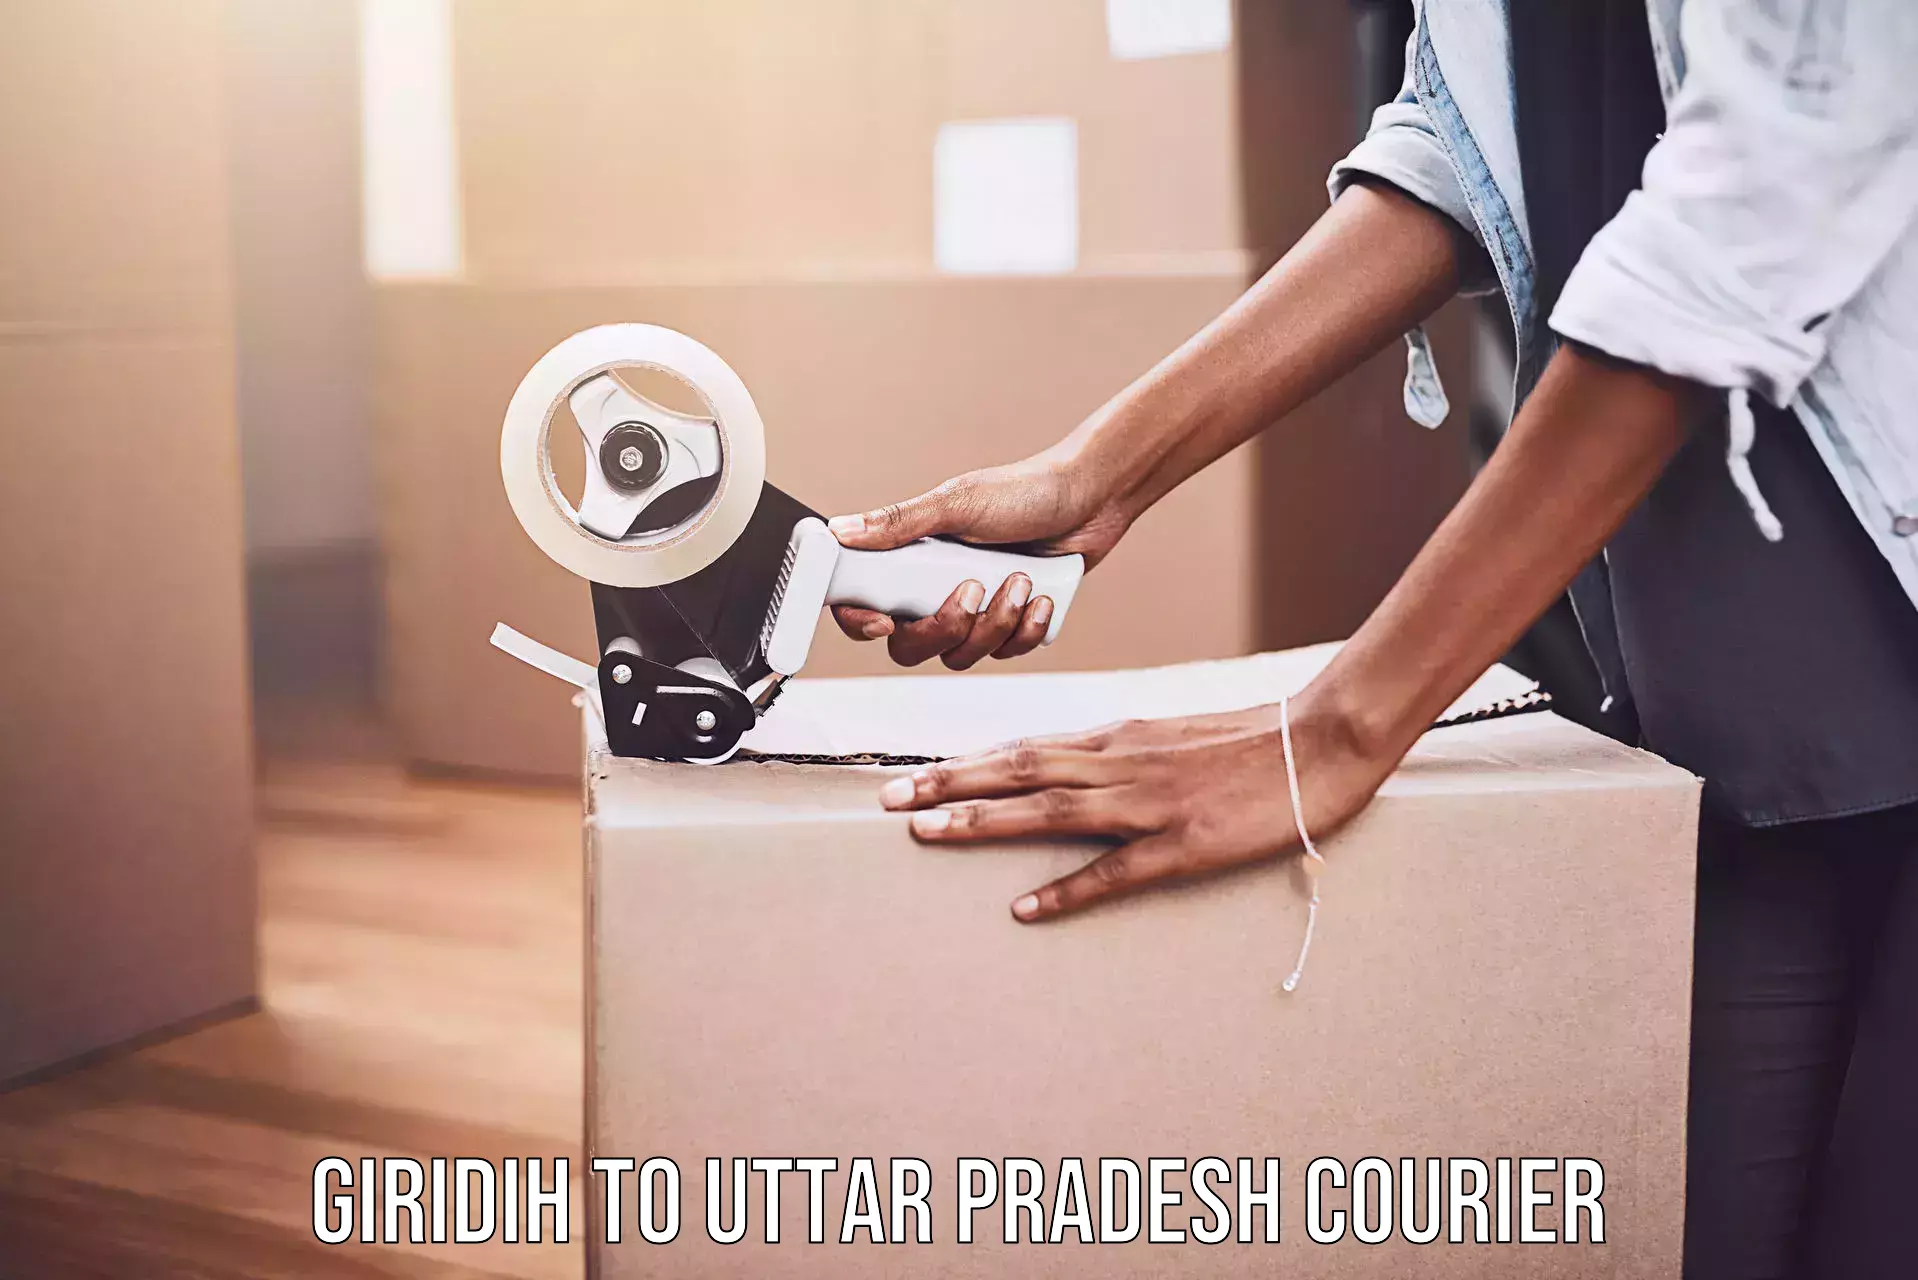 Quick dispatch service Giridih to Uttar Pradesh